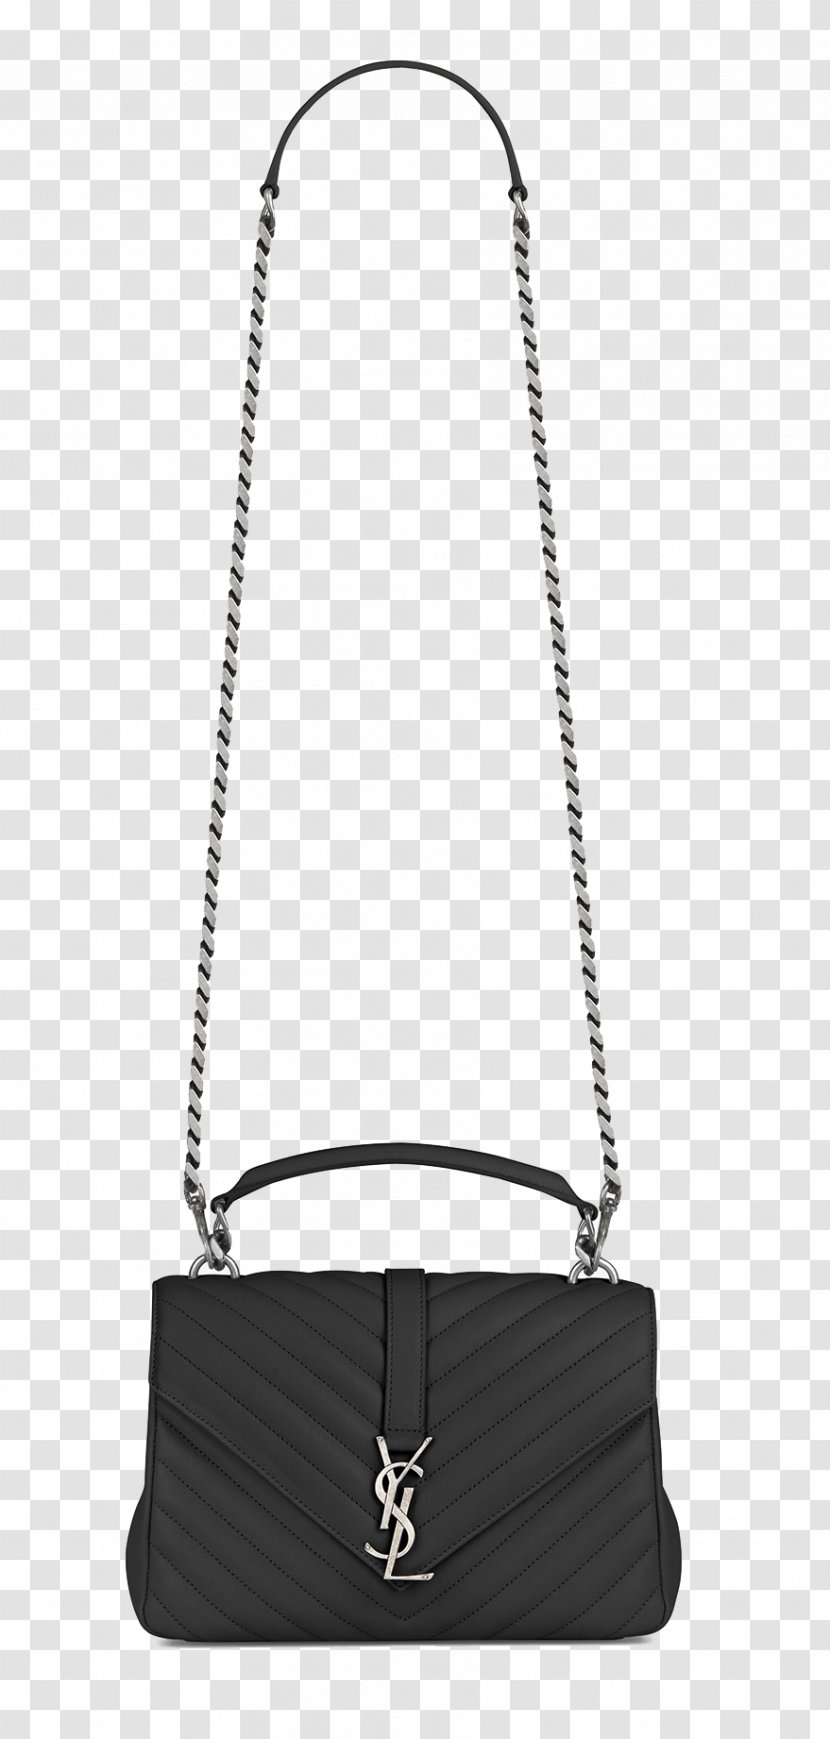 Yves Saint Laurent Handbag Leather Hermxe8s - Monochrome Photography - SaintLaurent Chain Bag Transparent PNG